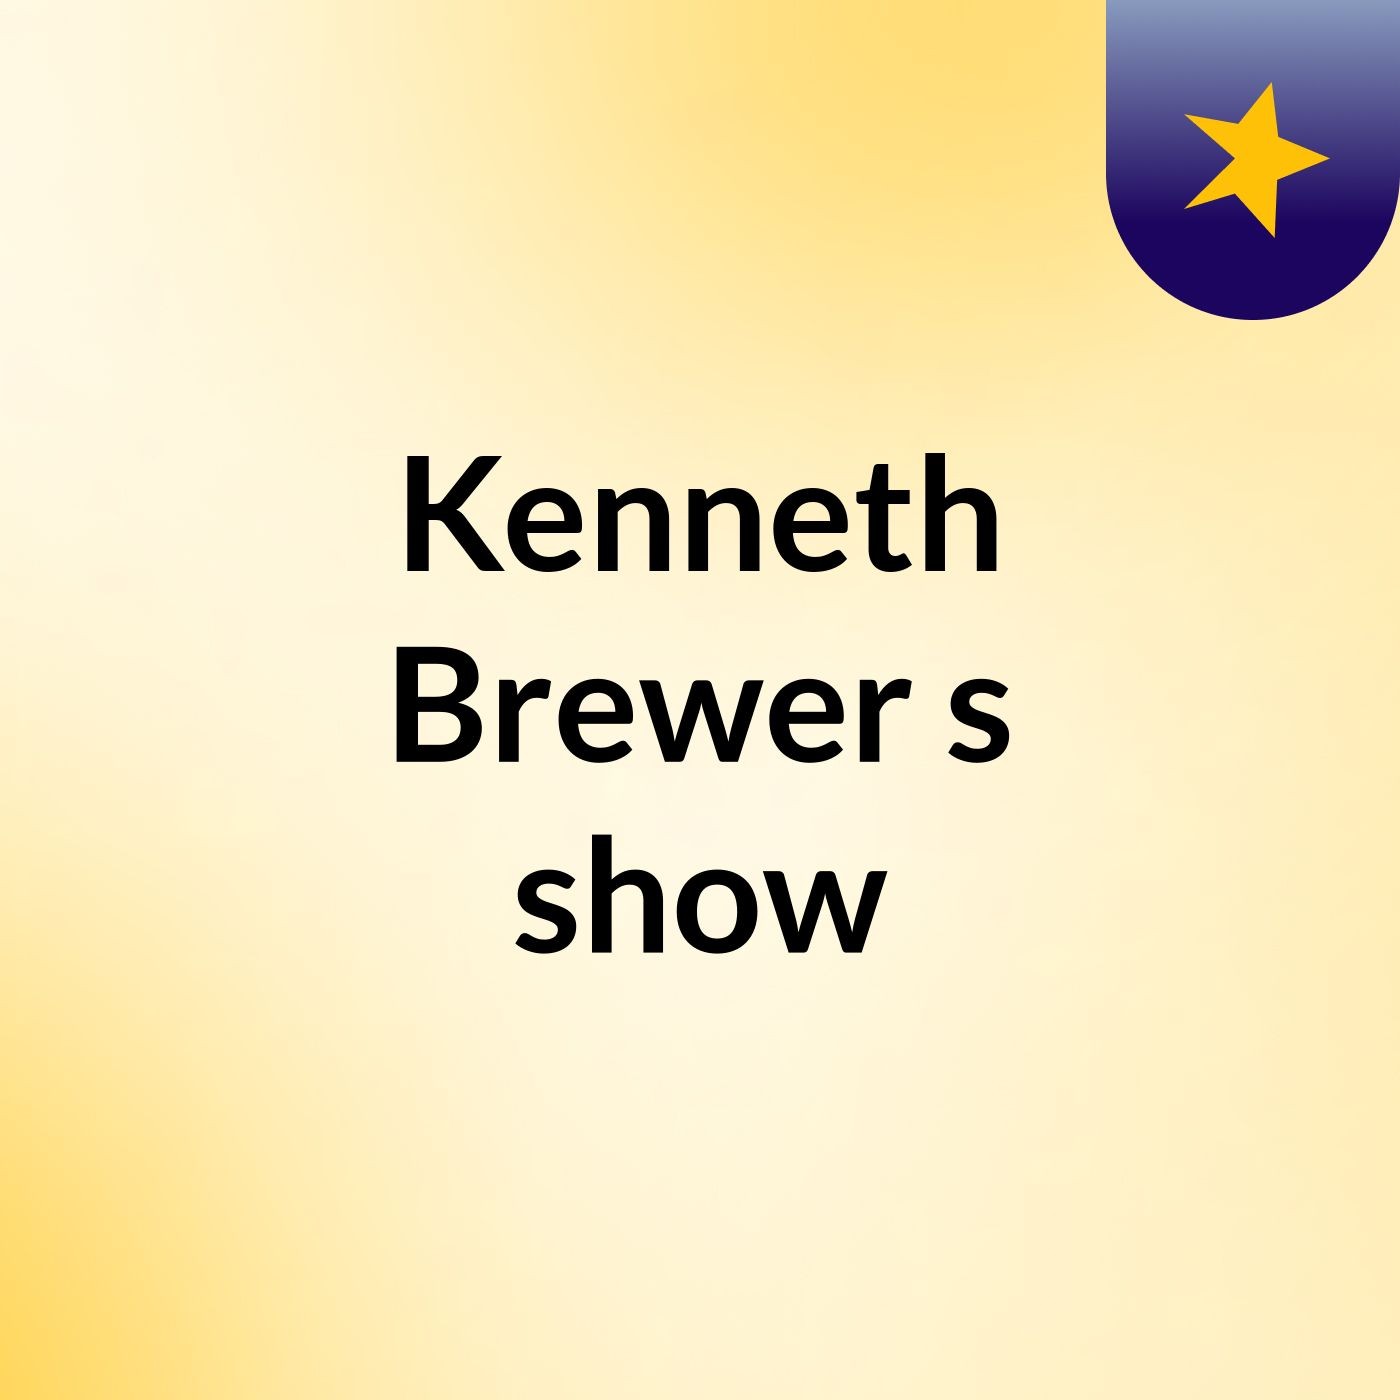 Kenneth Brewer's show